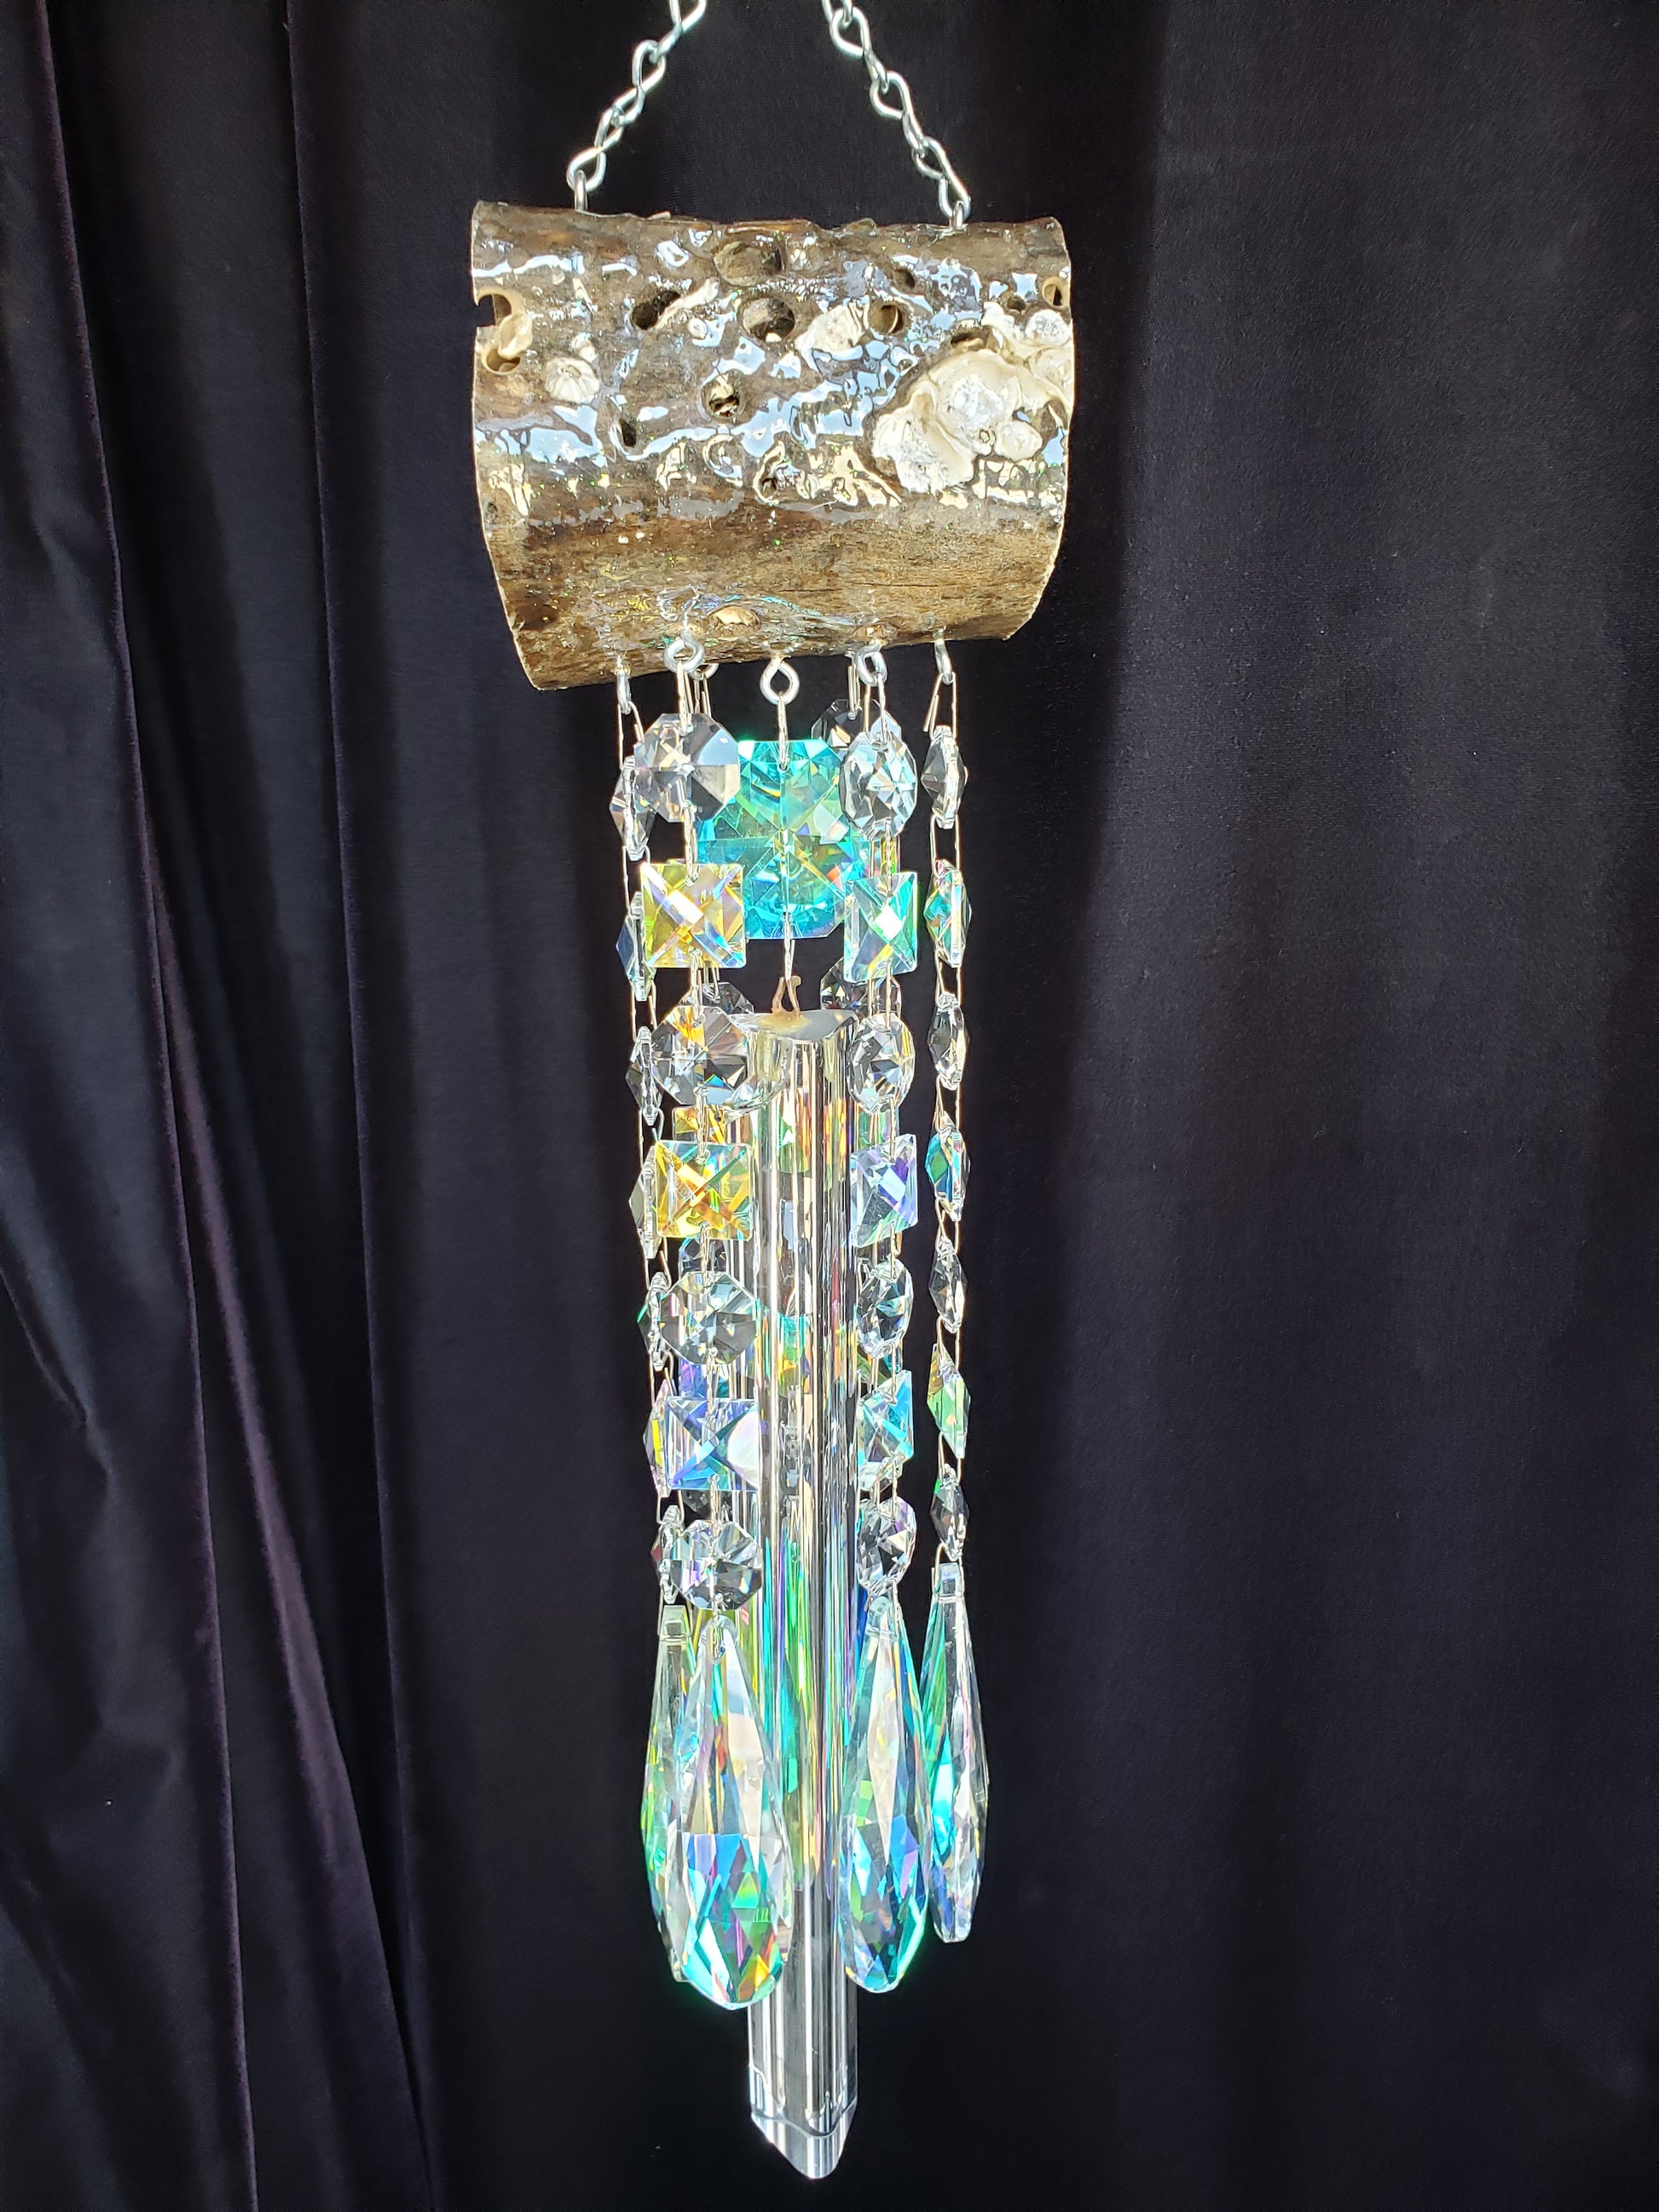 Handmade unique chandelier crystal windchime suncatcher